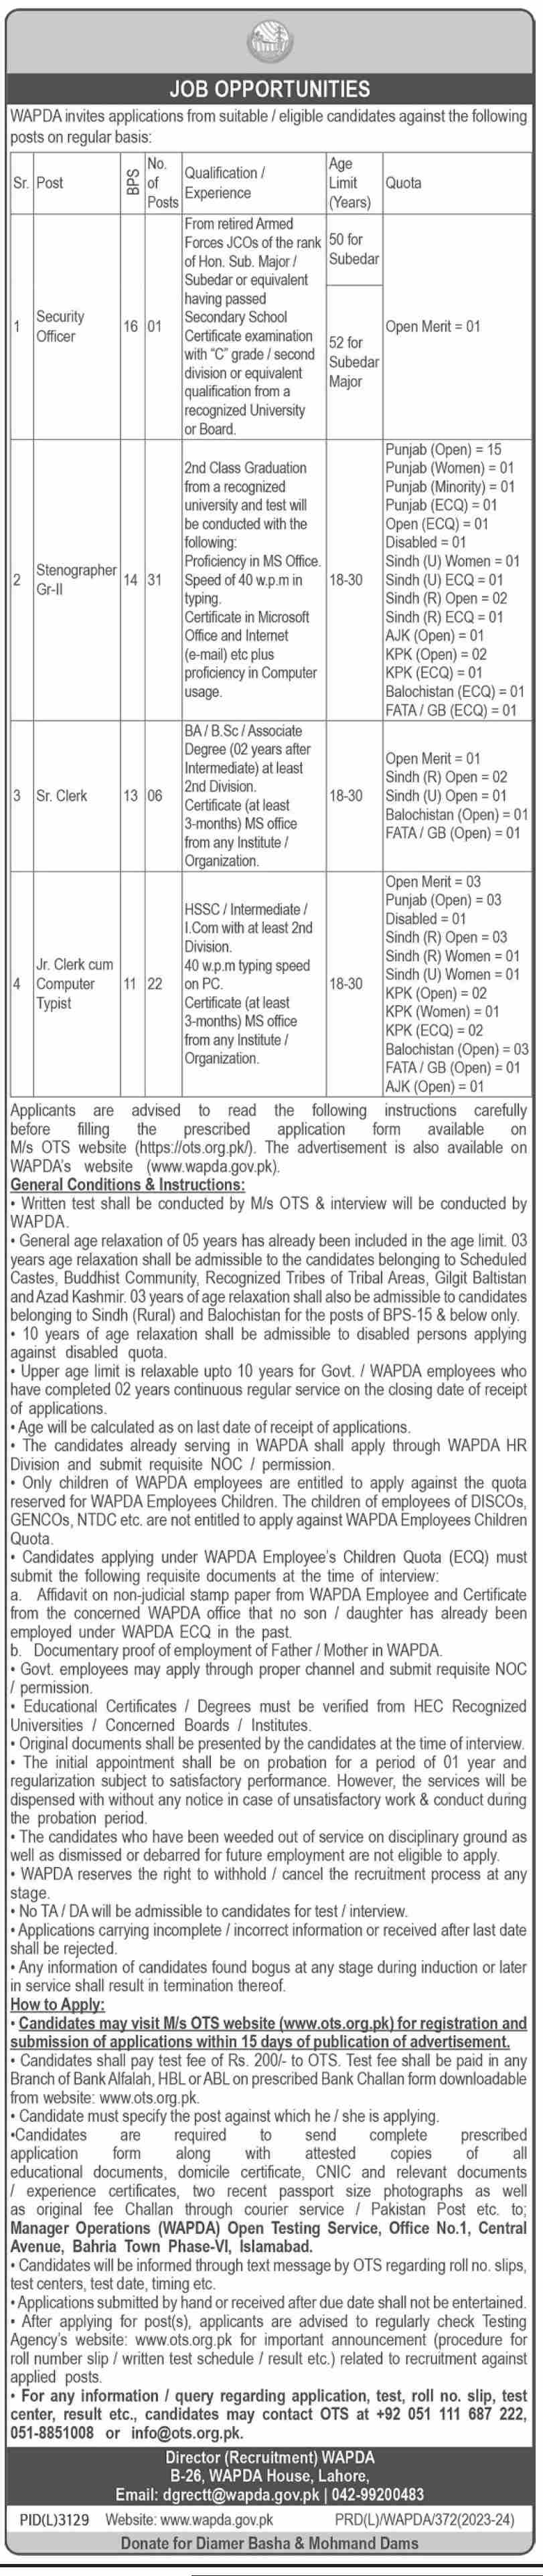 www.wapda.gov.pk latest Jobs 2023 Application Form Download ots.org.pk Advertisement